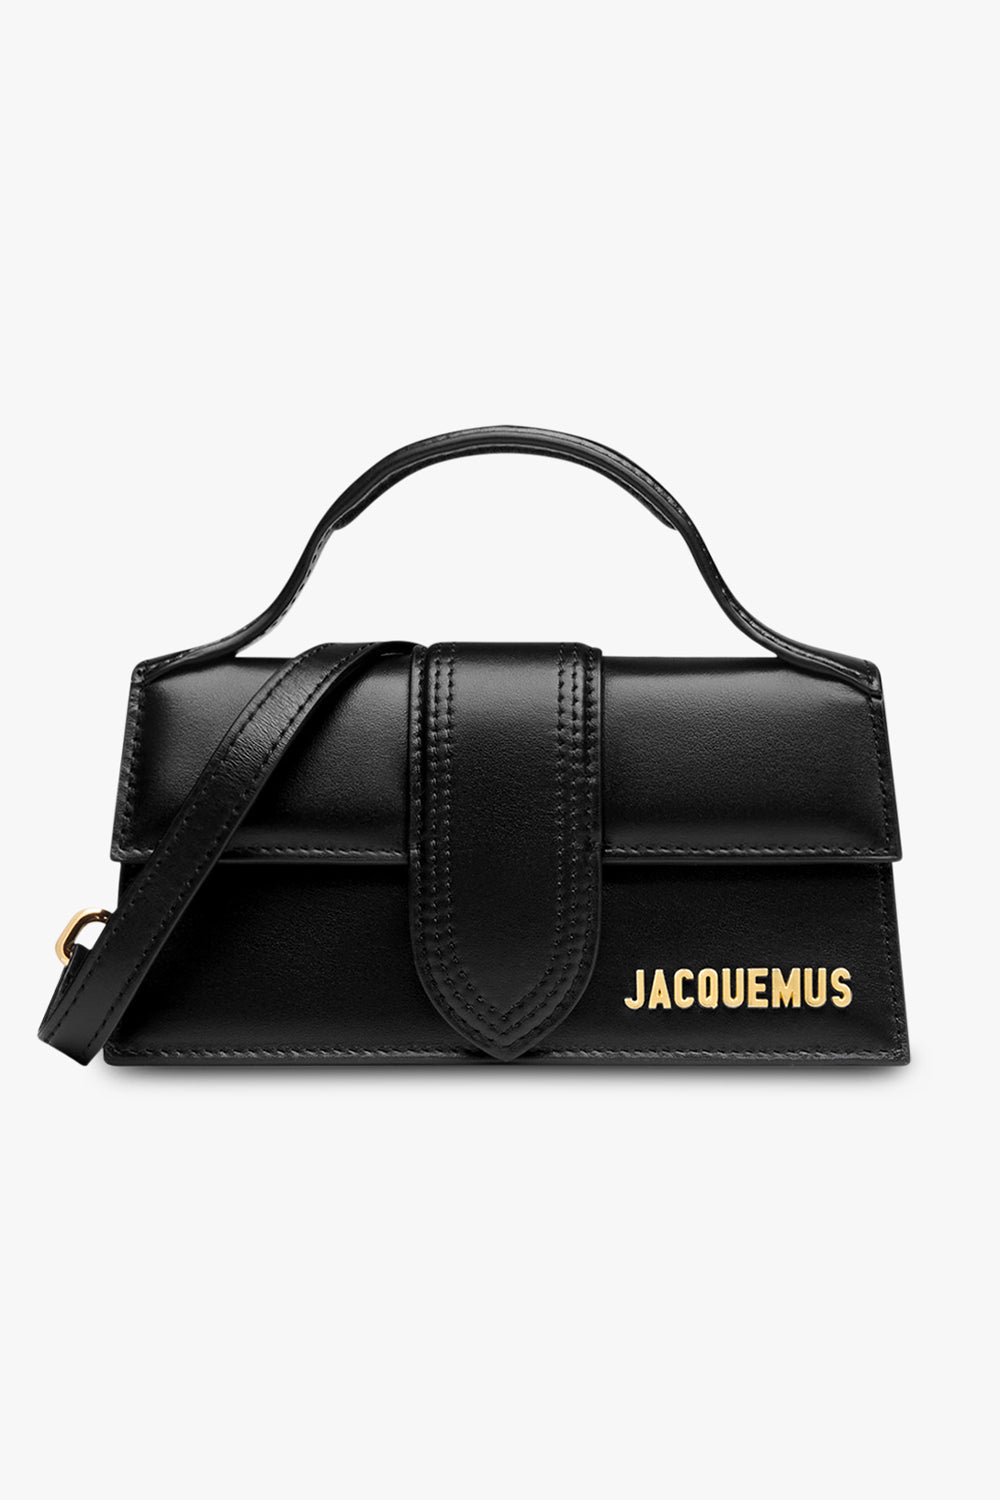 JACQUEMUS BAGS BLACK LE BAMBINO BAG | BLACK